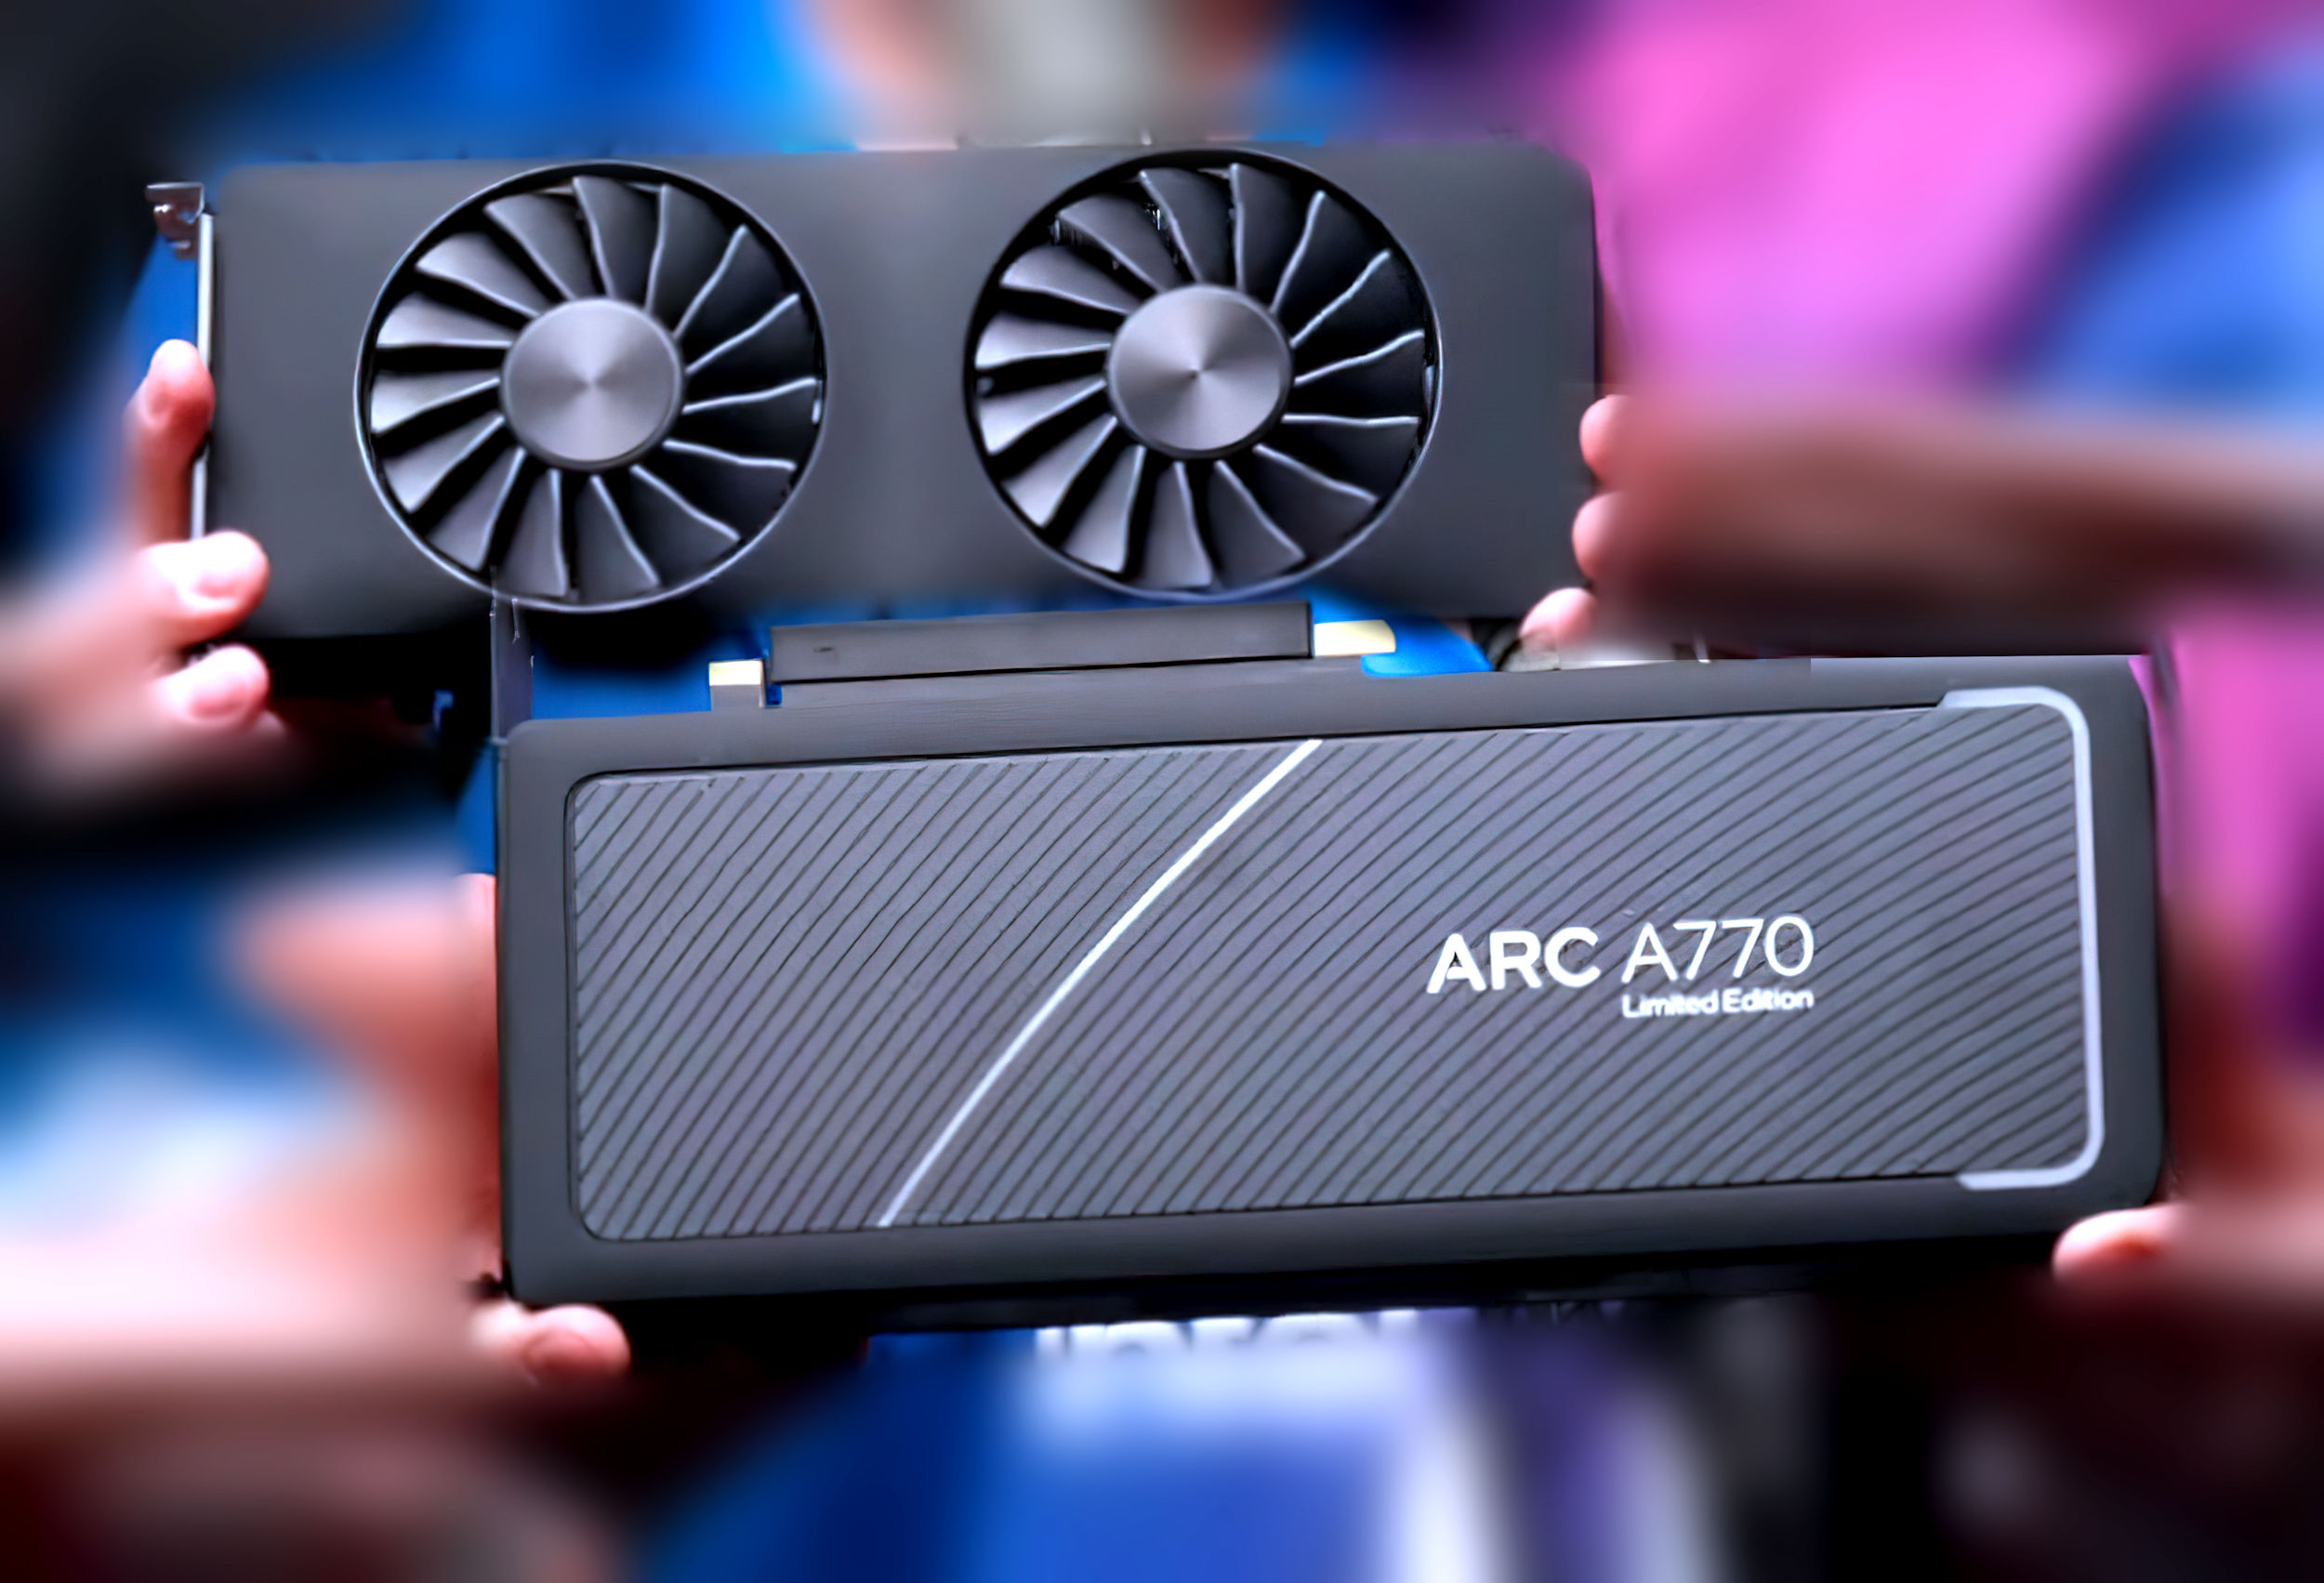 Intel confirma a placa gráfica Arc A770 Limited Edition